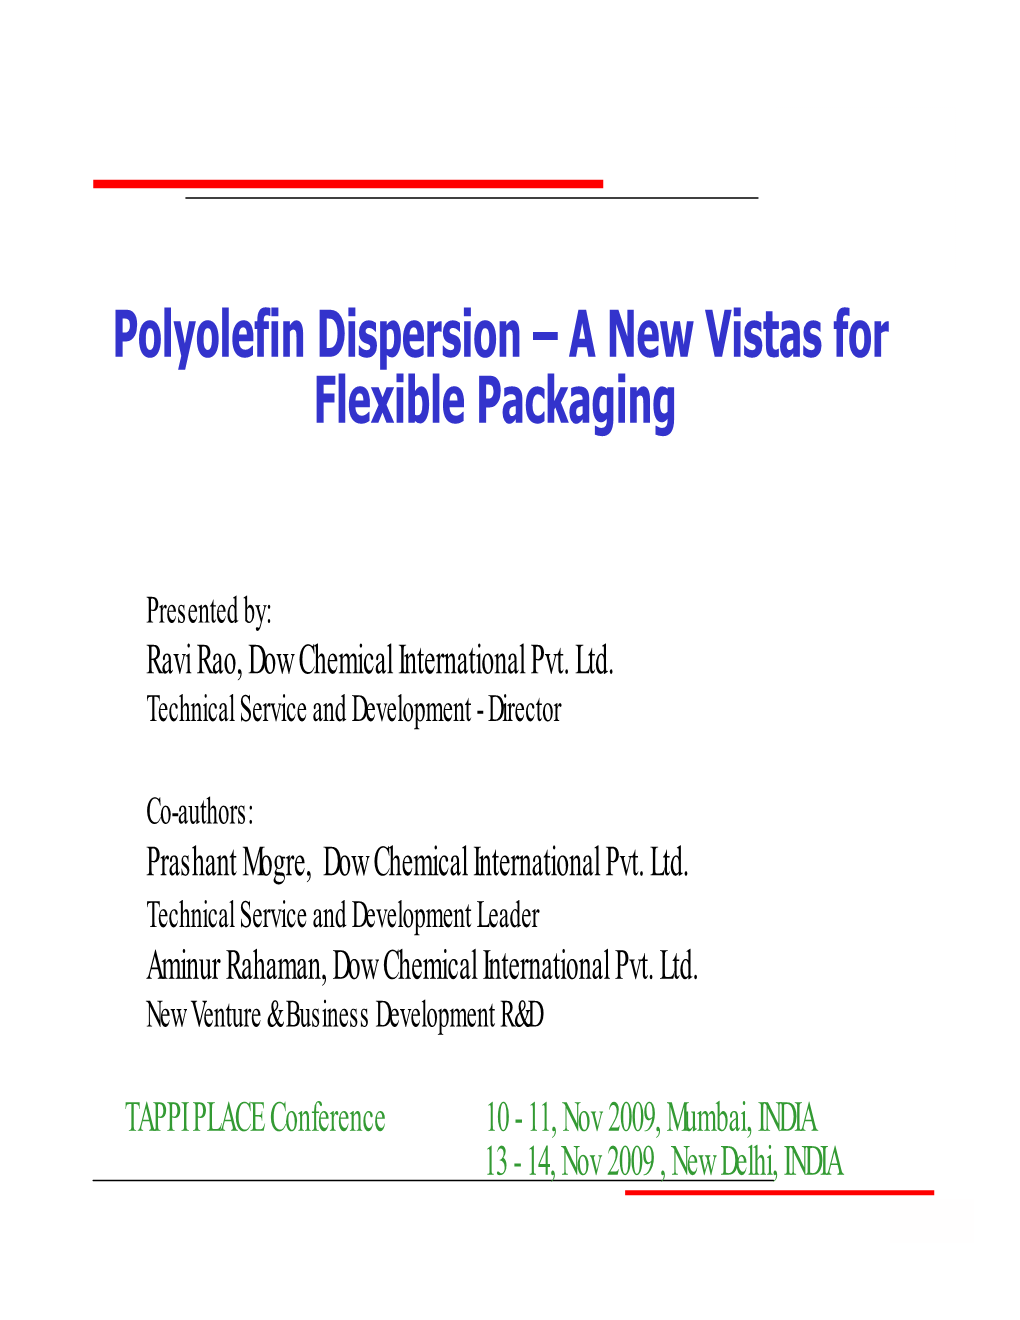 Polyolefin Dispersion – a New Vistas for Flexible Packaging